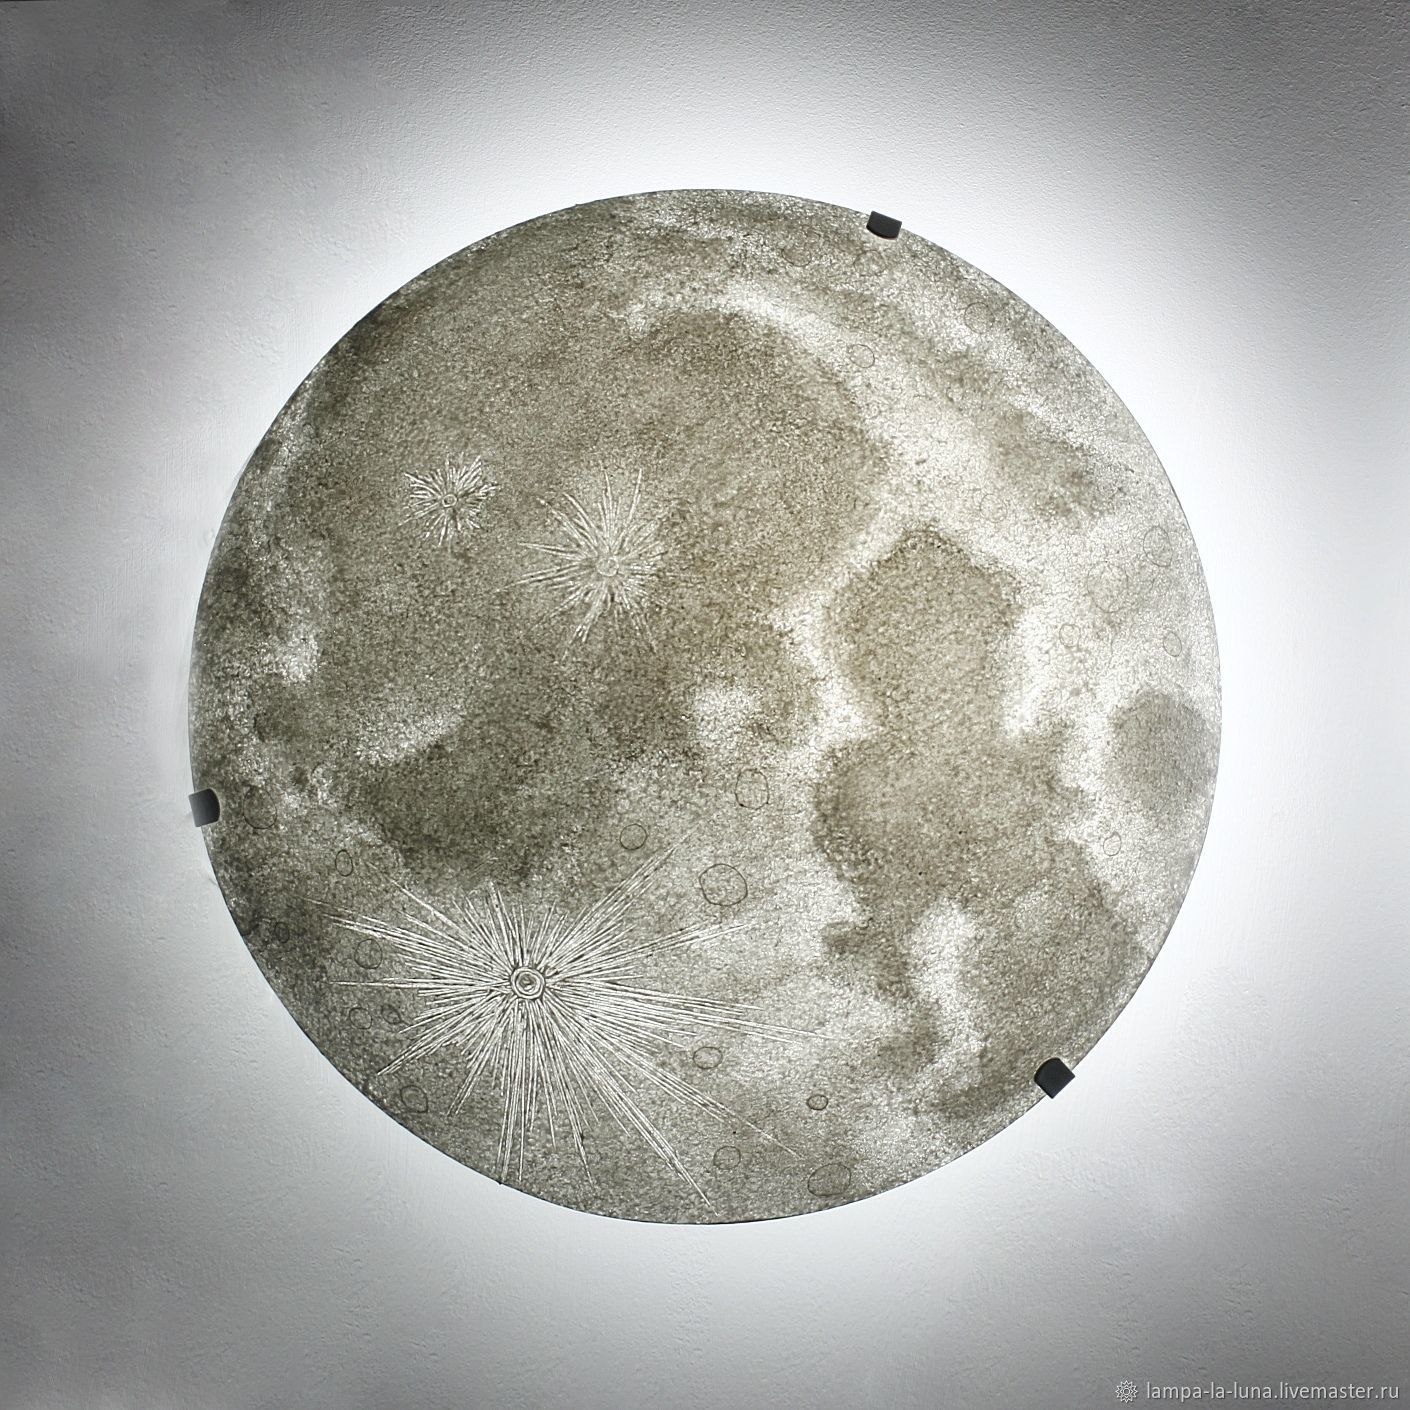 Ночник (бра) - Луна 25 см, Ночники, Санкт-Петербург,  Фото №1